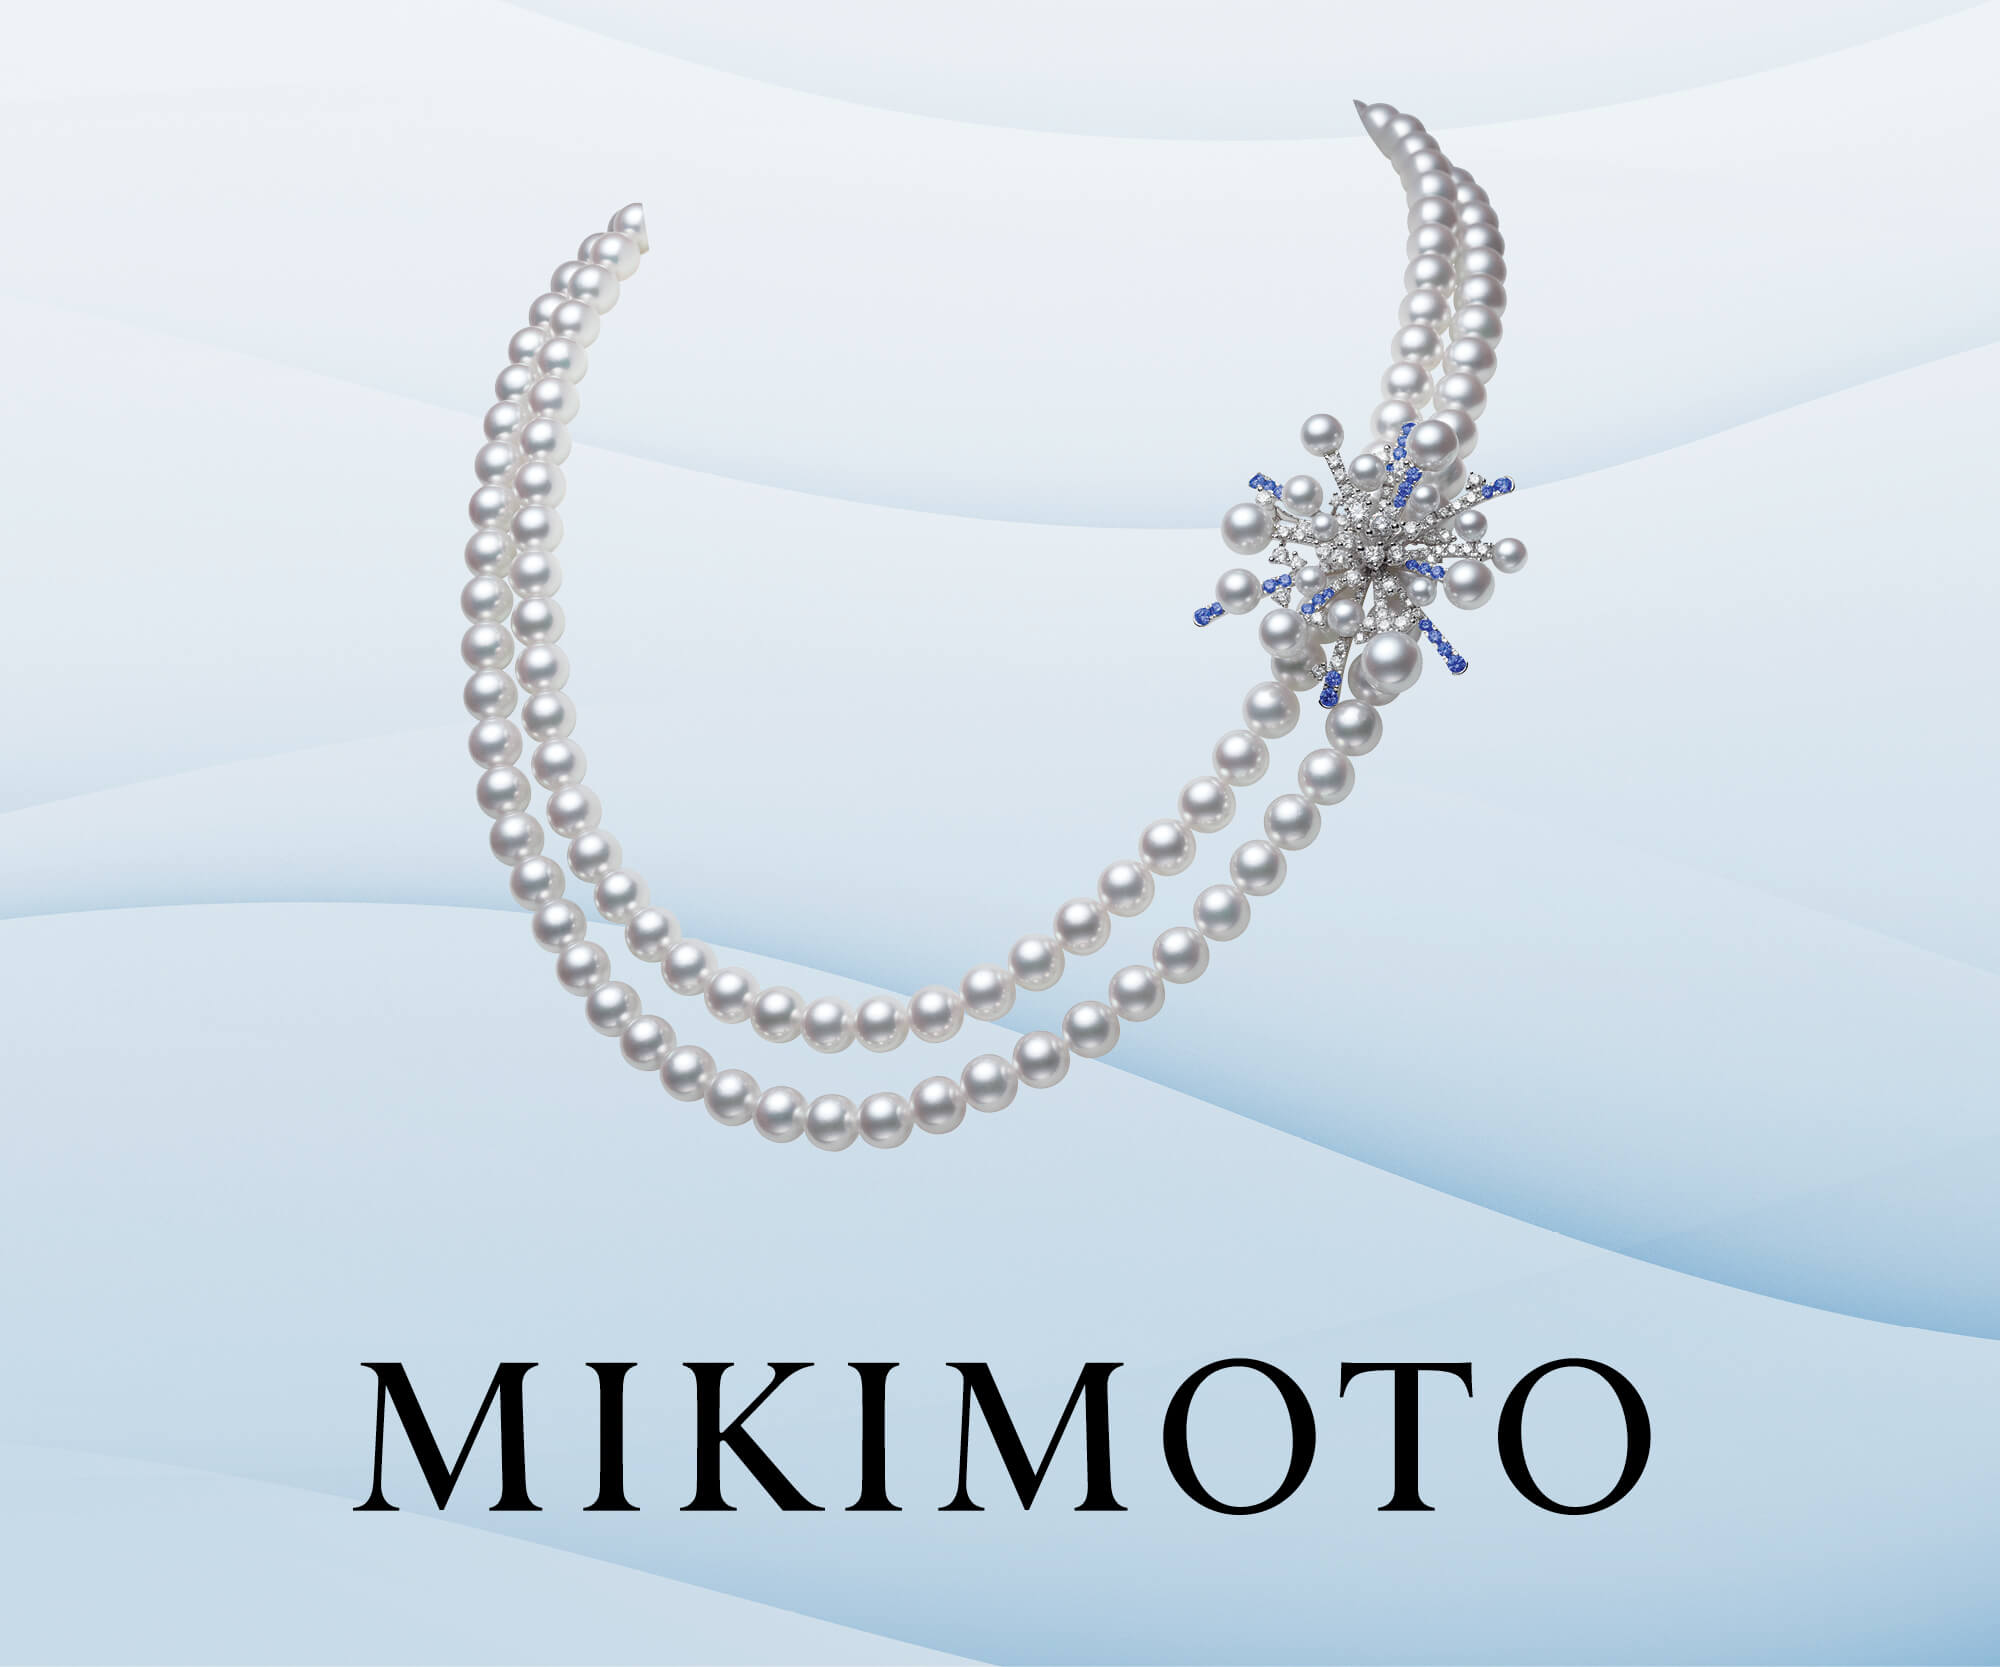 Mikimoto Earrings Banner